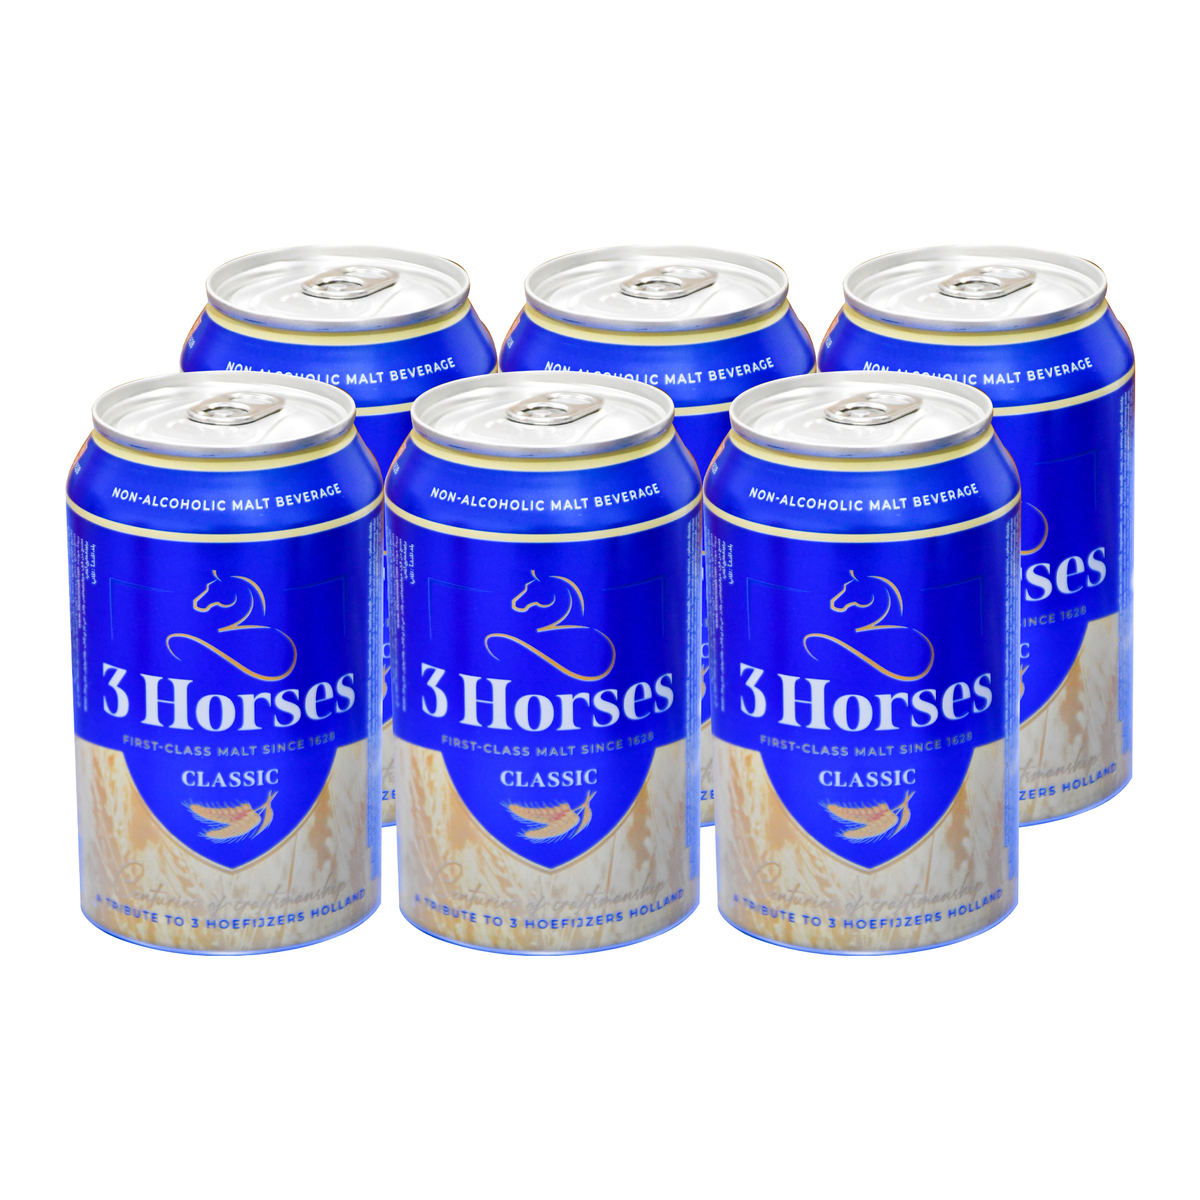 3 Horses Non-Alcoholic Malt Beverages 330ml